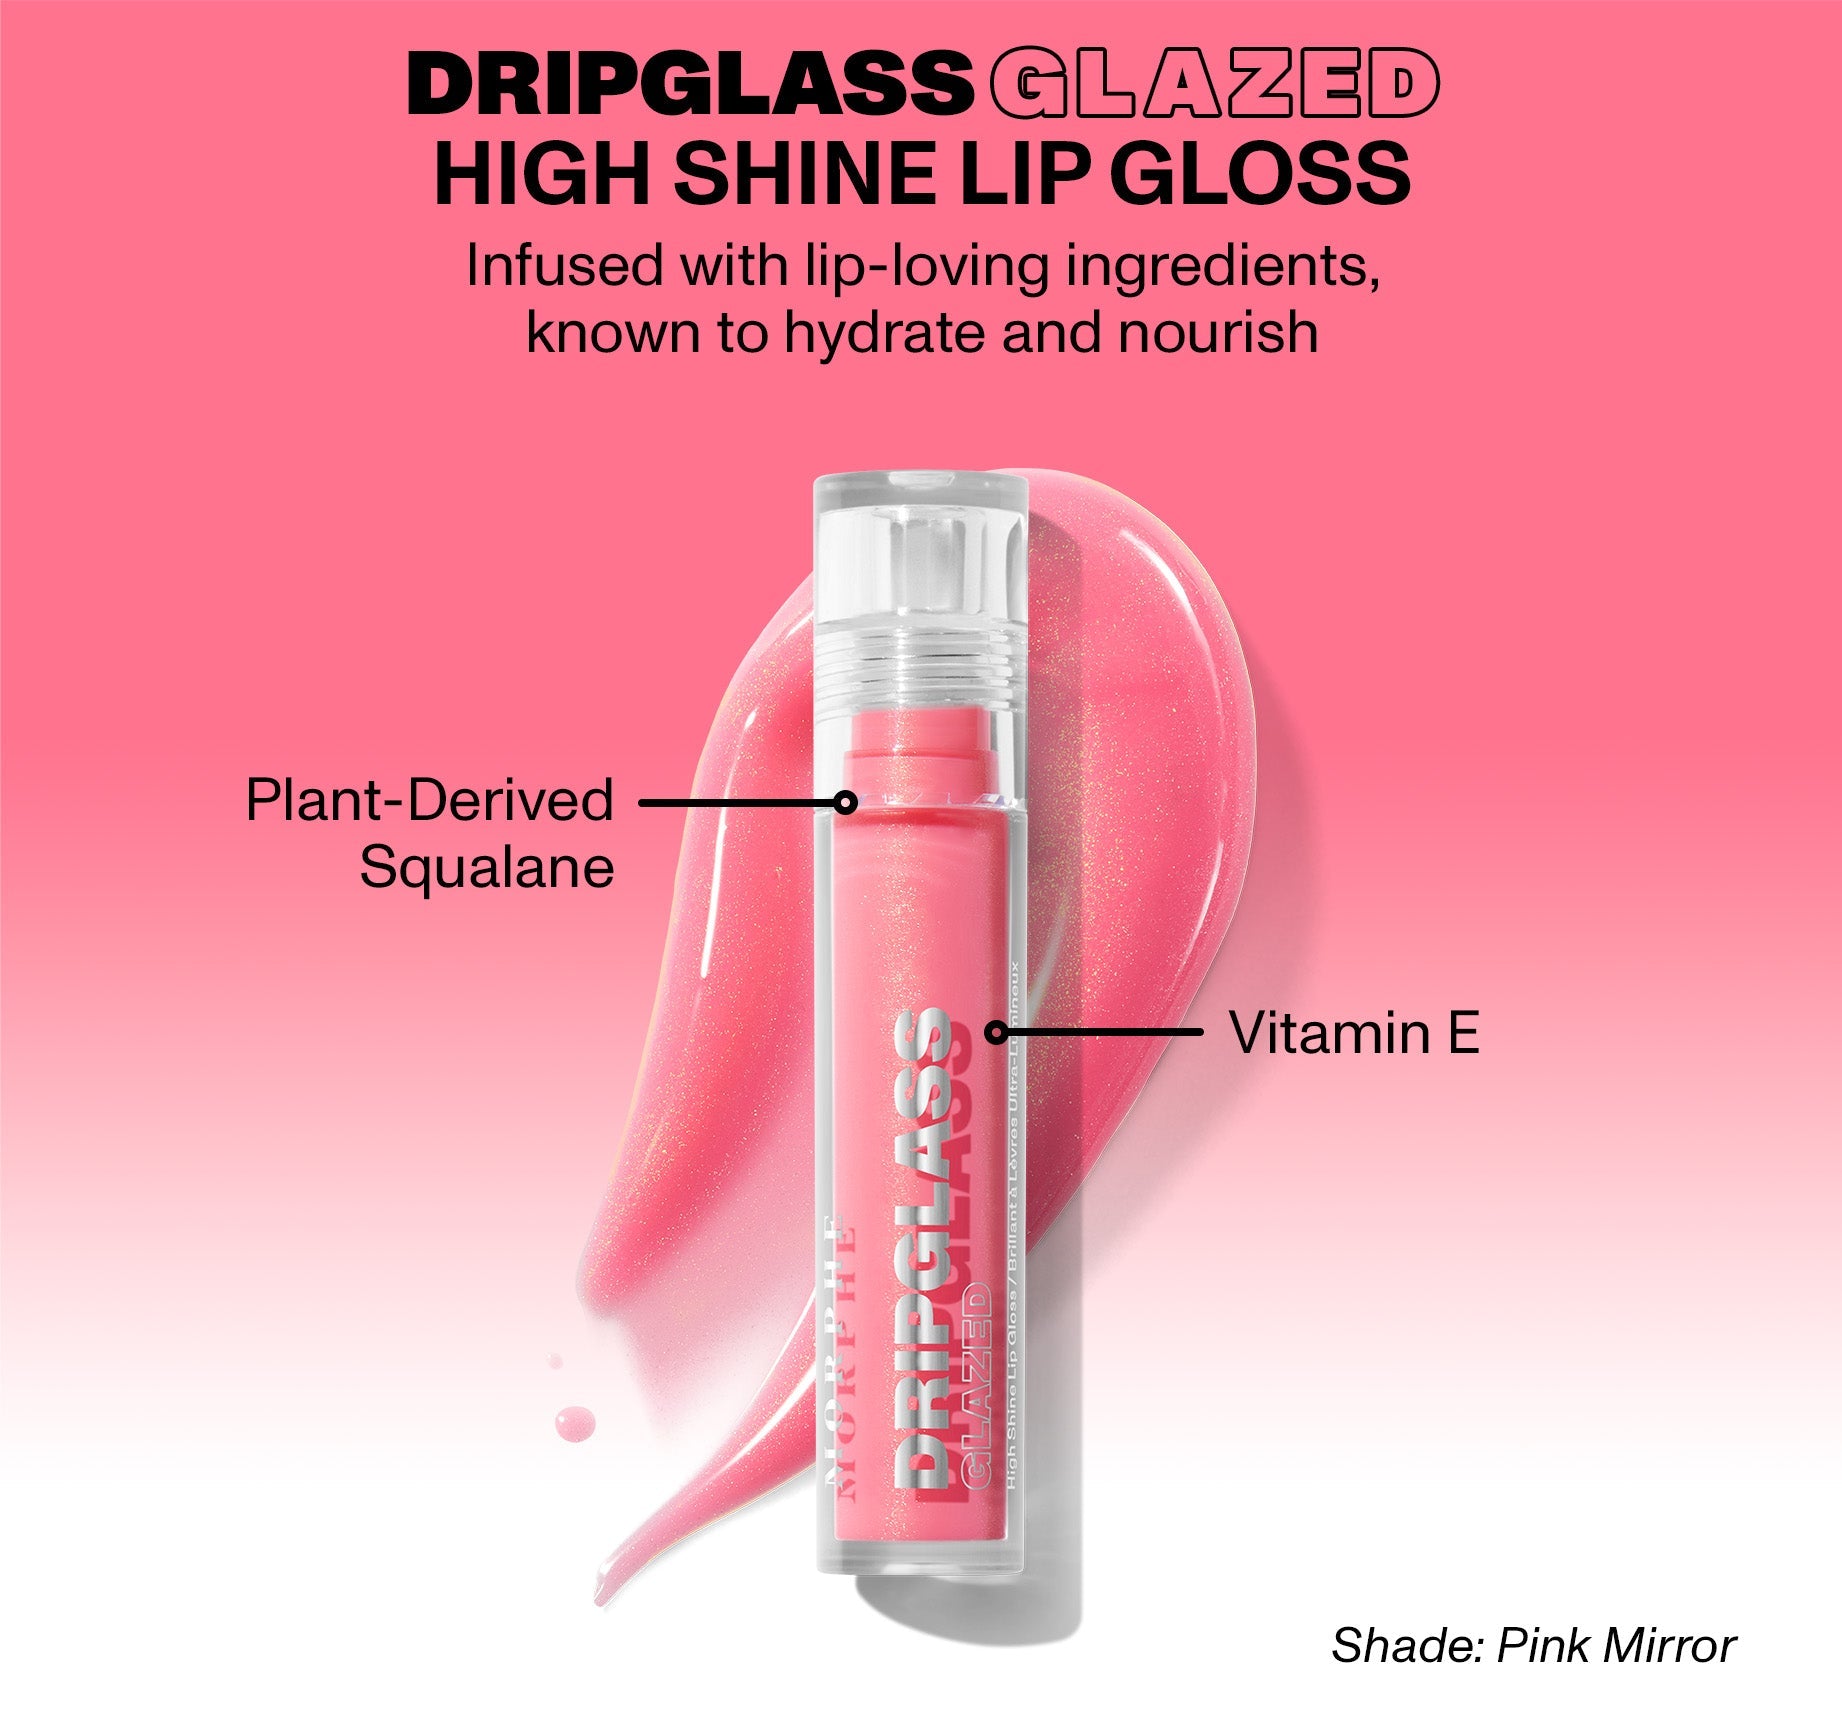 Dripglass Glazed High Shine Lip Gloss - Unbreakable Brick - Image 8